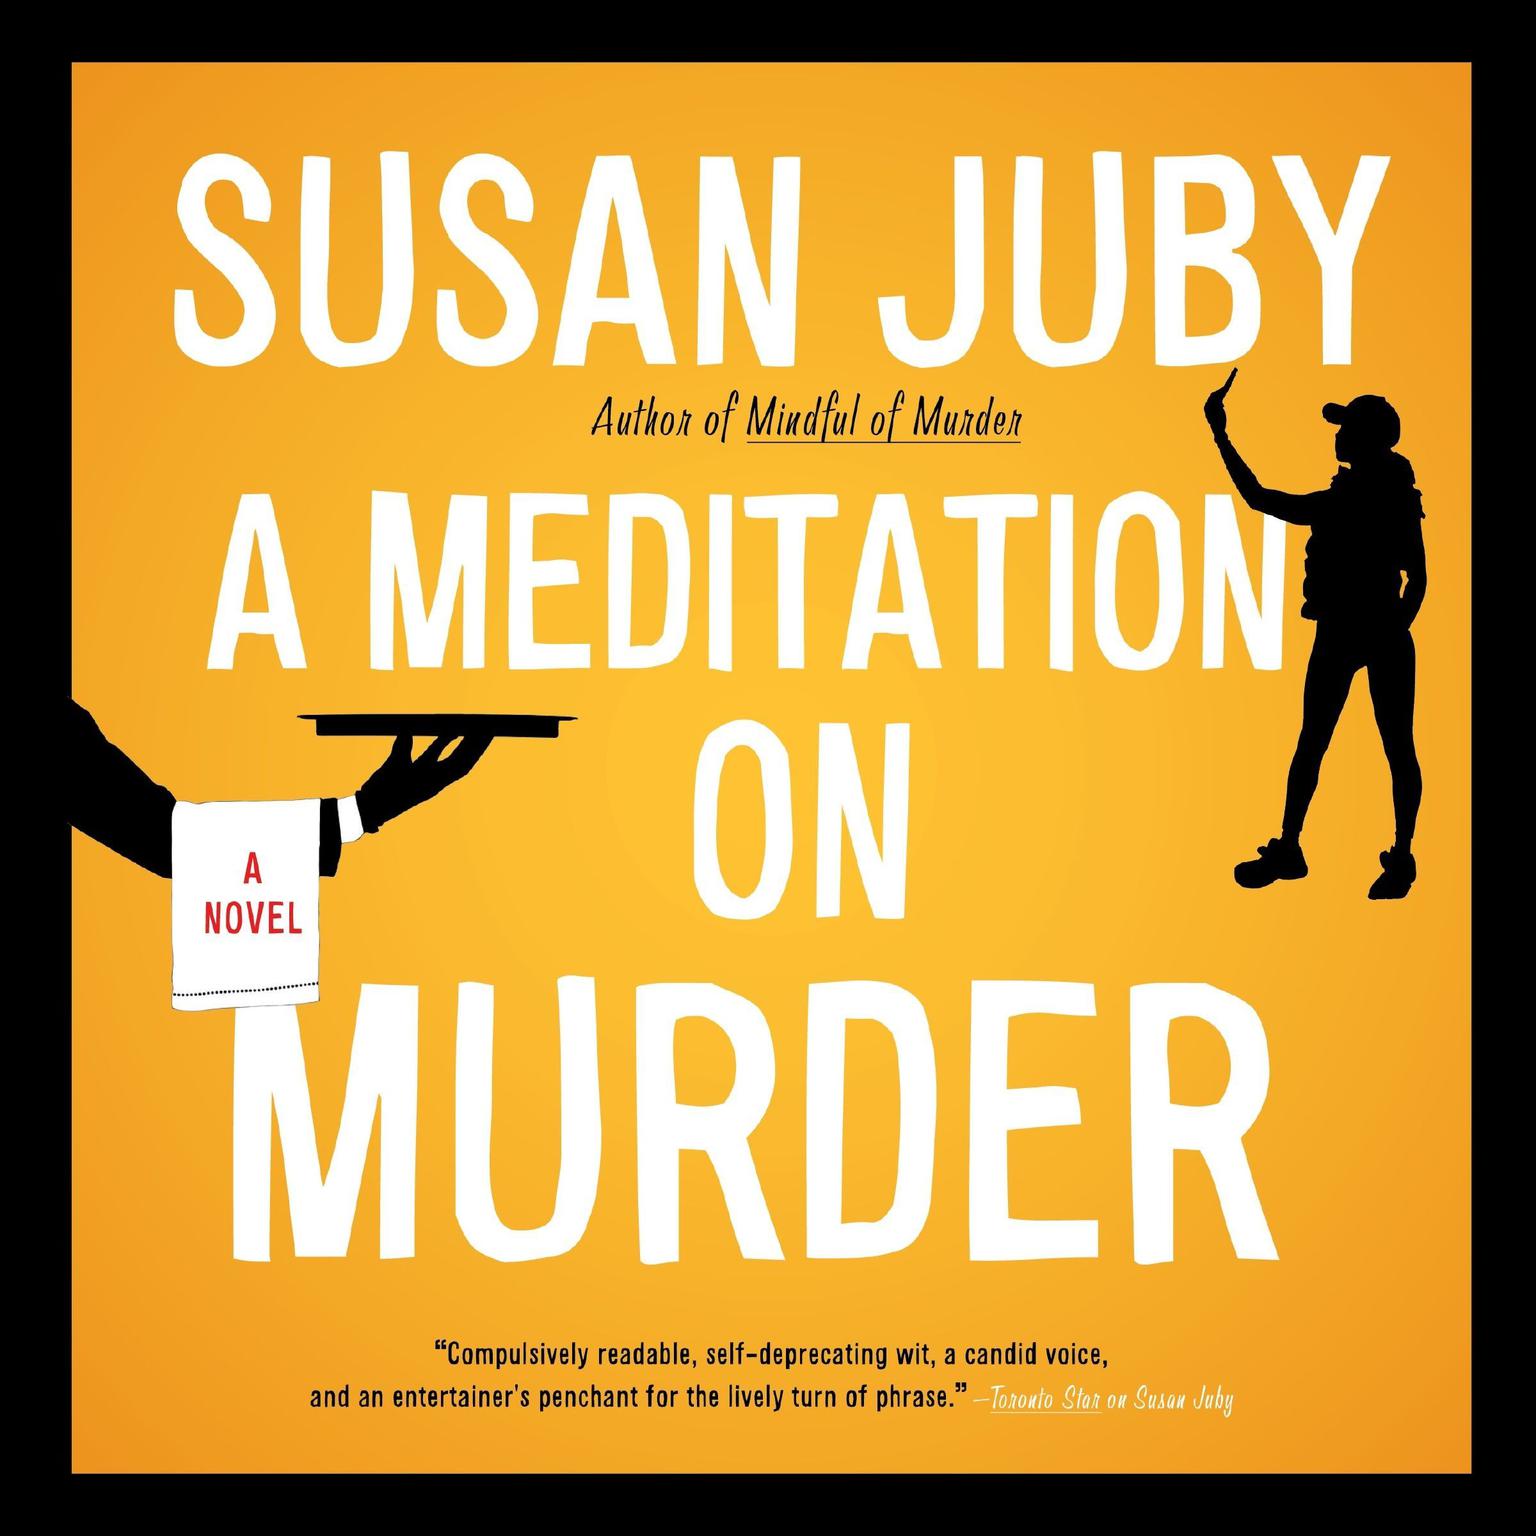 A Meditation on Murder: A Novel Audiobook, by Susan Juby